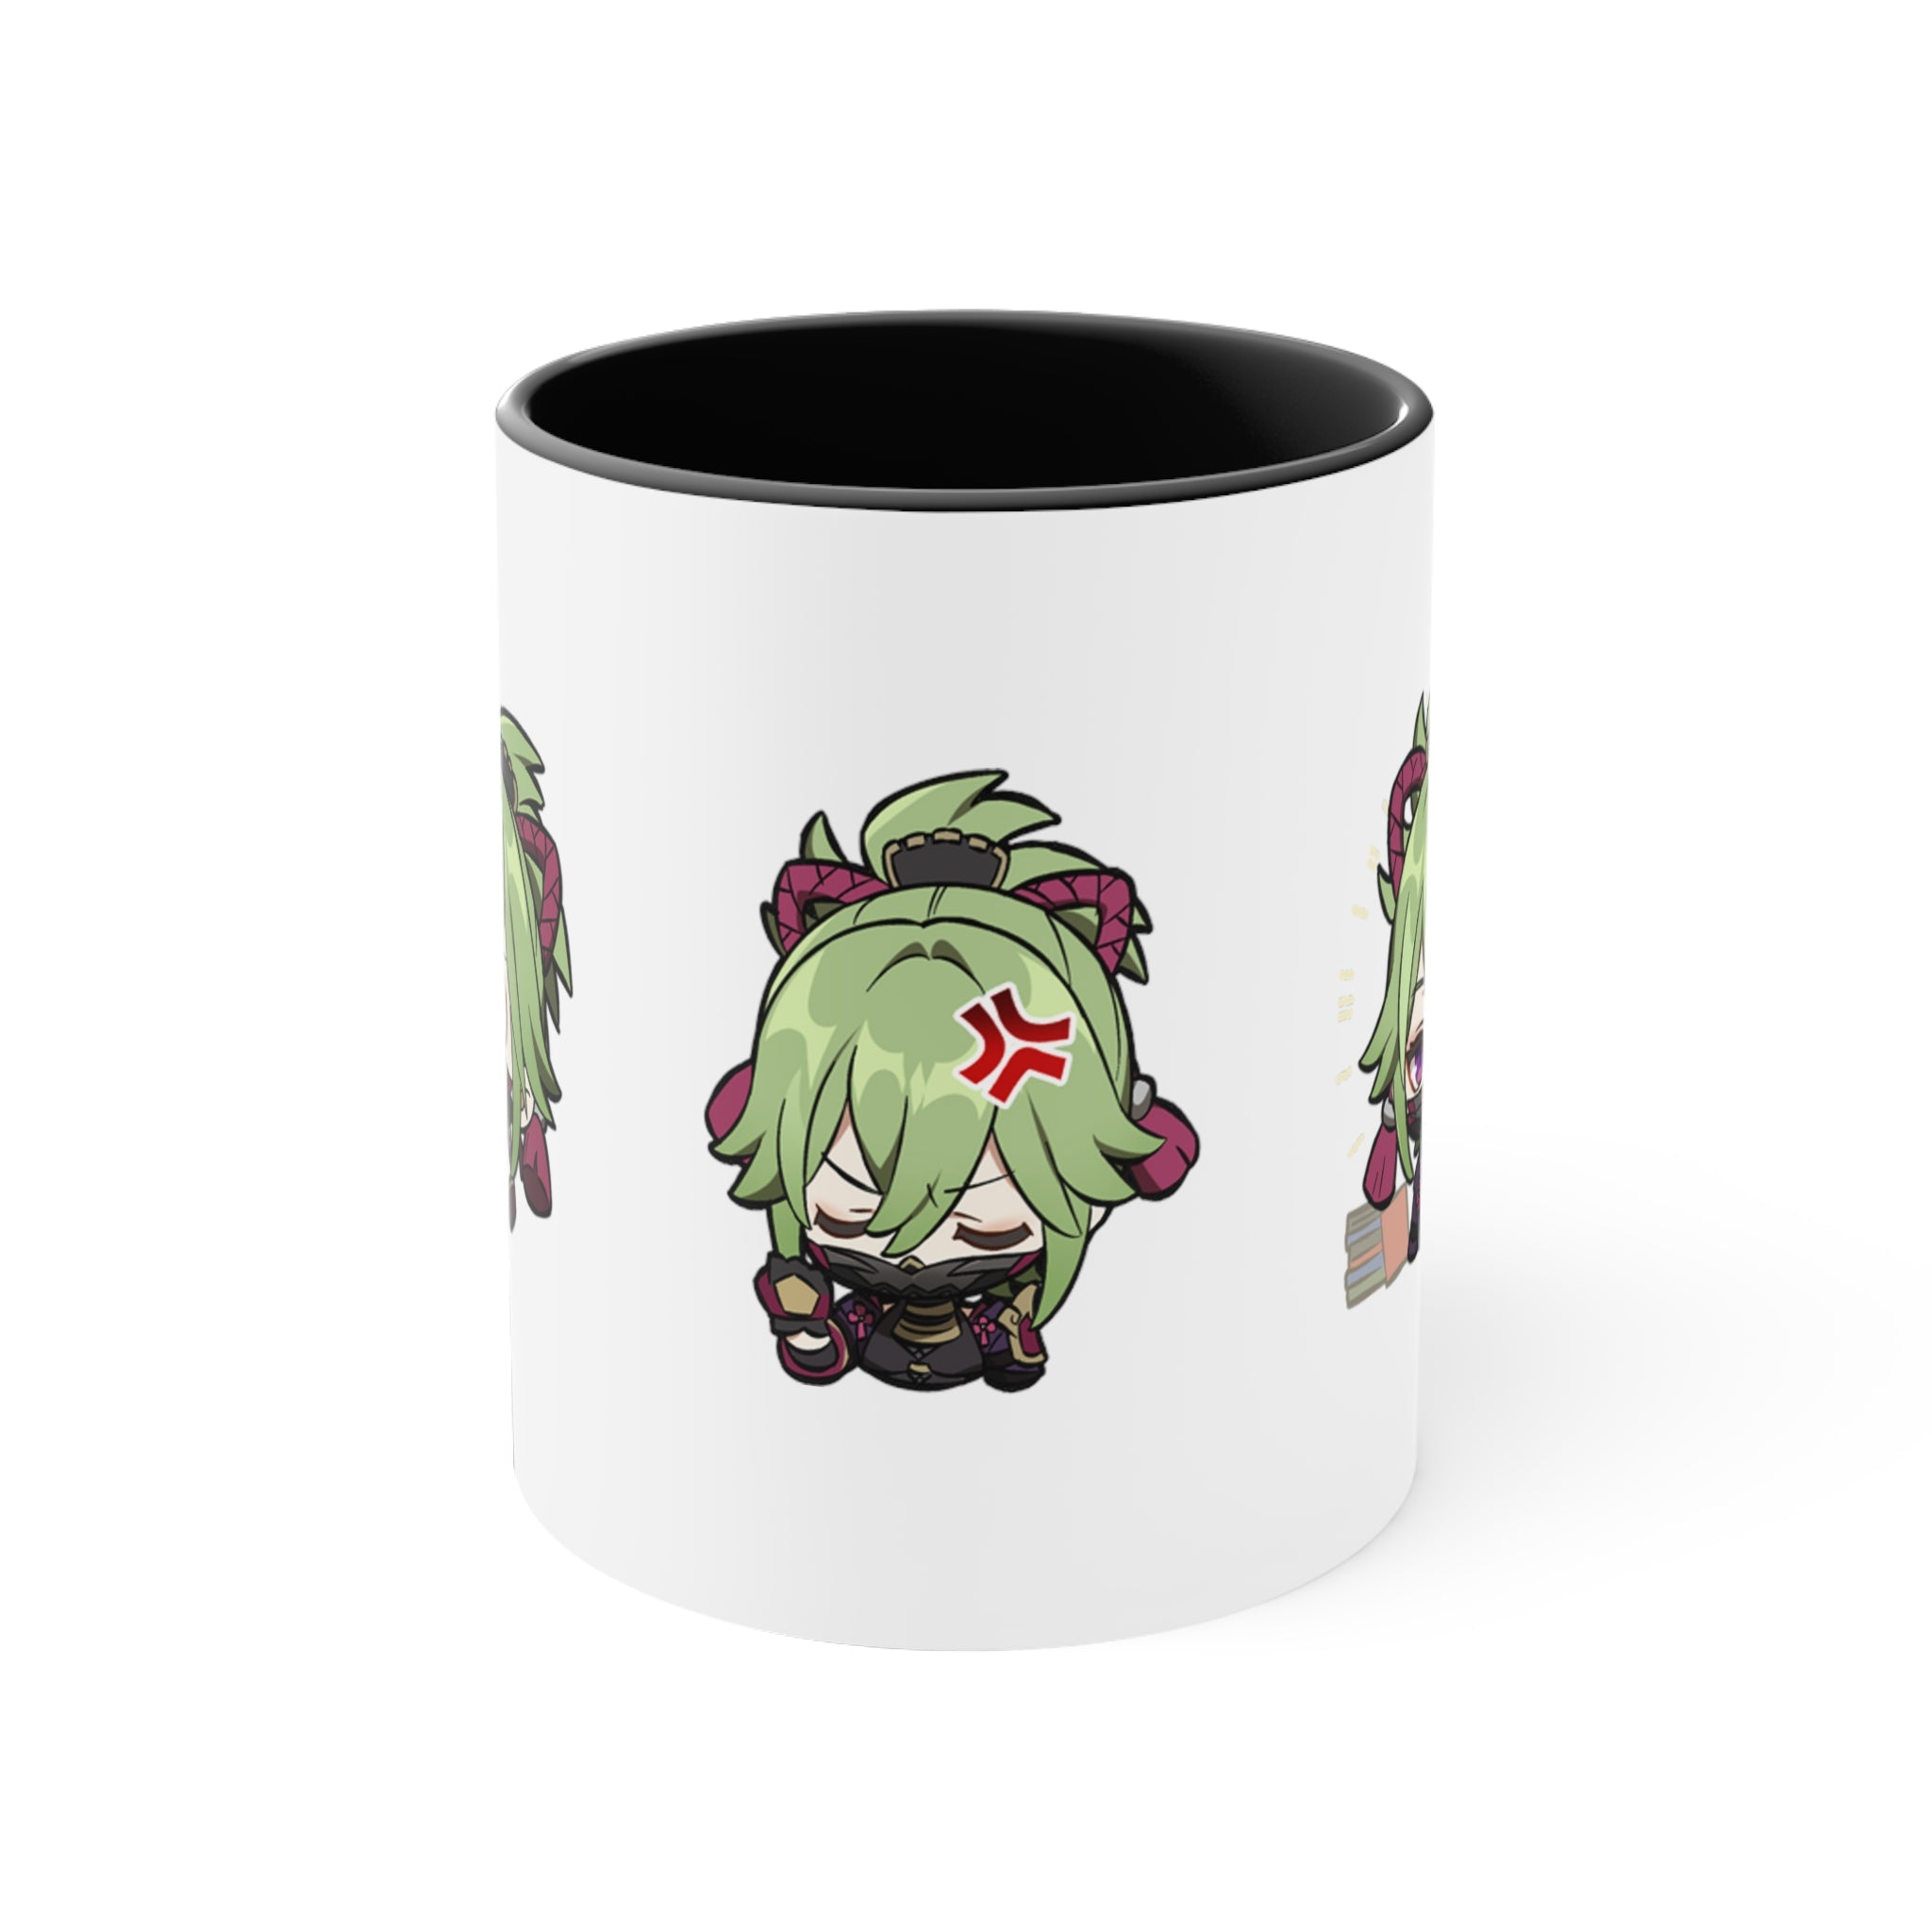 Kuki Genshin Impact Accent Coffee Mug, 11oz Cups Mugs Cup Gift For Gamer Gifts Game Anime Fanart Fan Birthday Valentine's Christmas